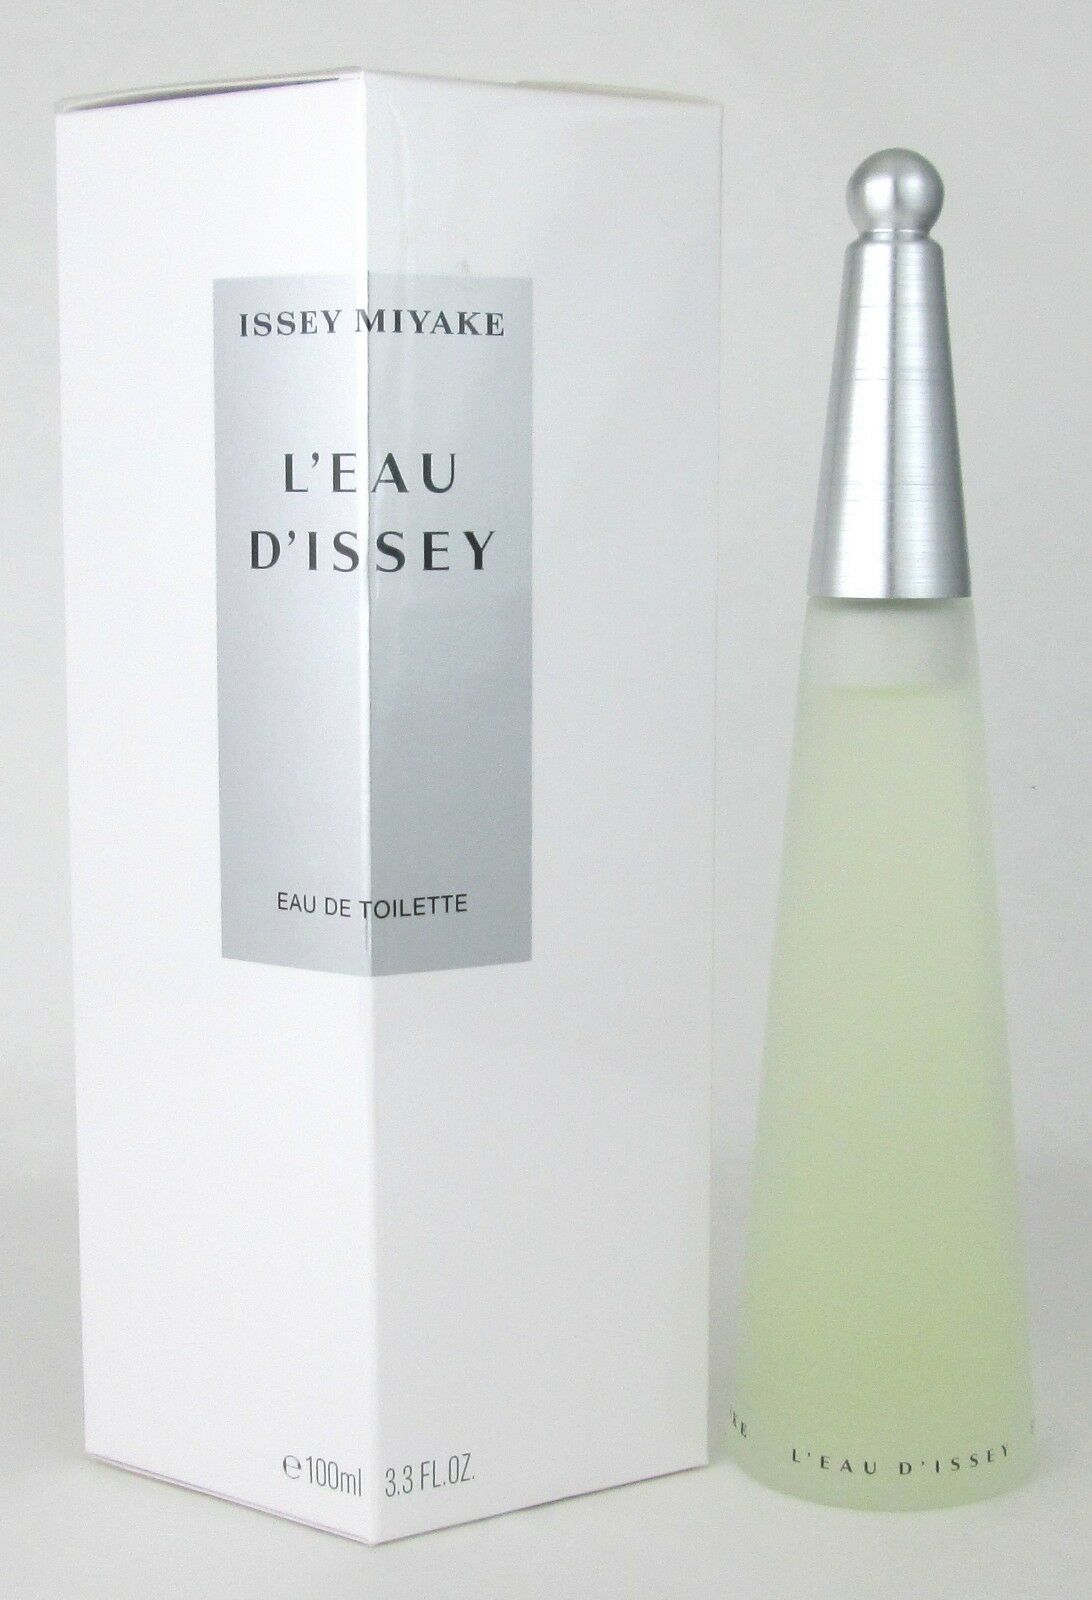 Issey miyake духи. Исси Мияки l'Eau d'Issey женские. L'Eau d'Issey Issey Miyake (1992). Иссей Мияке Парфюм женский Мияки Мияки. Issey Miyake l'Eau Dissey.